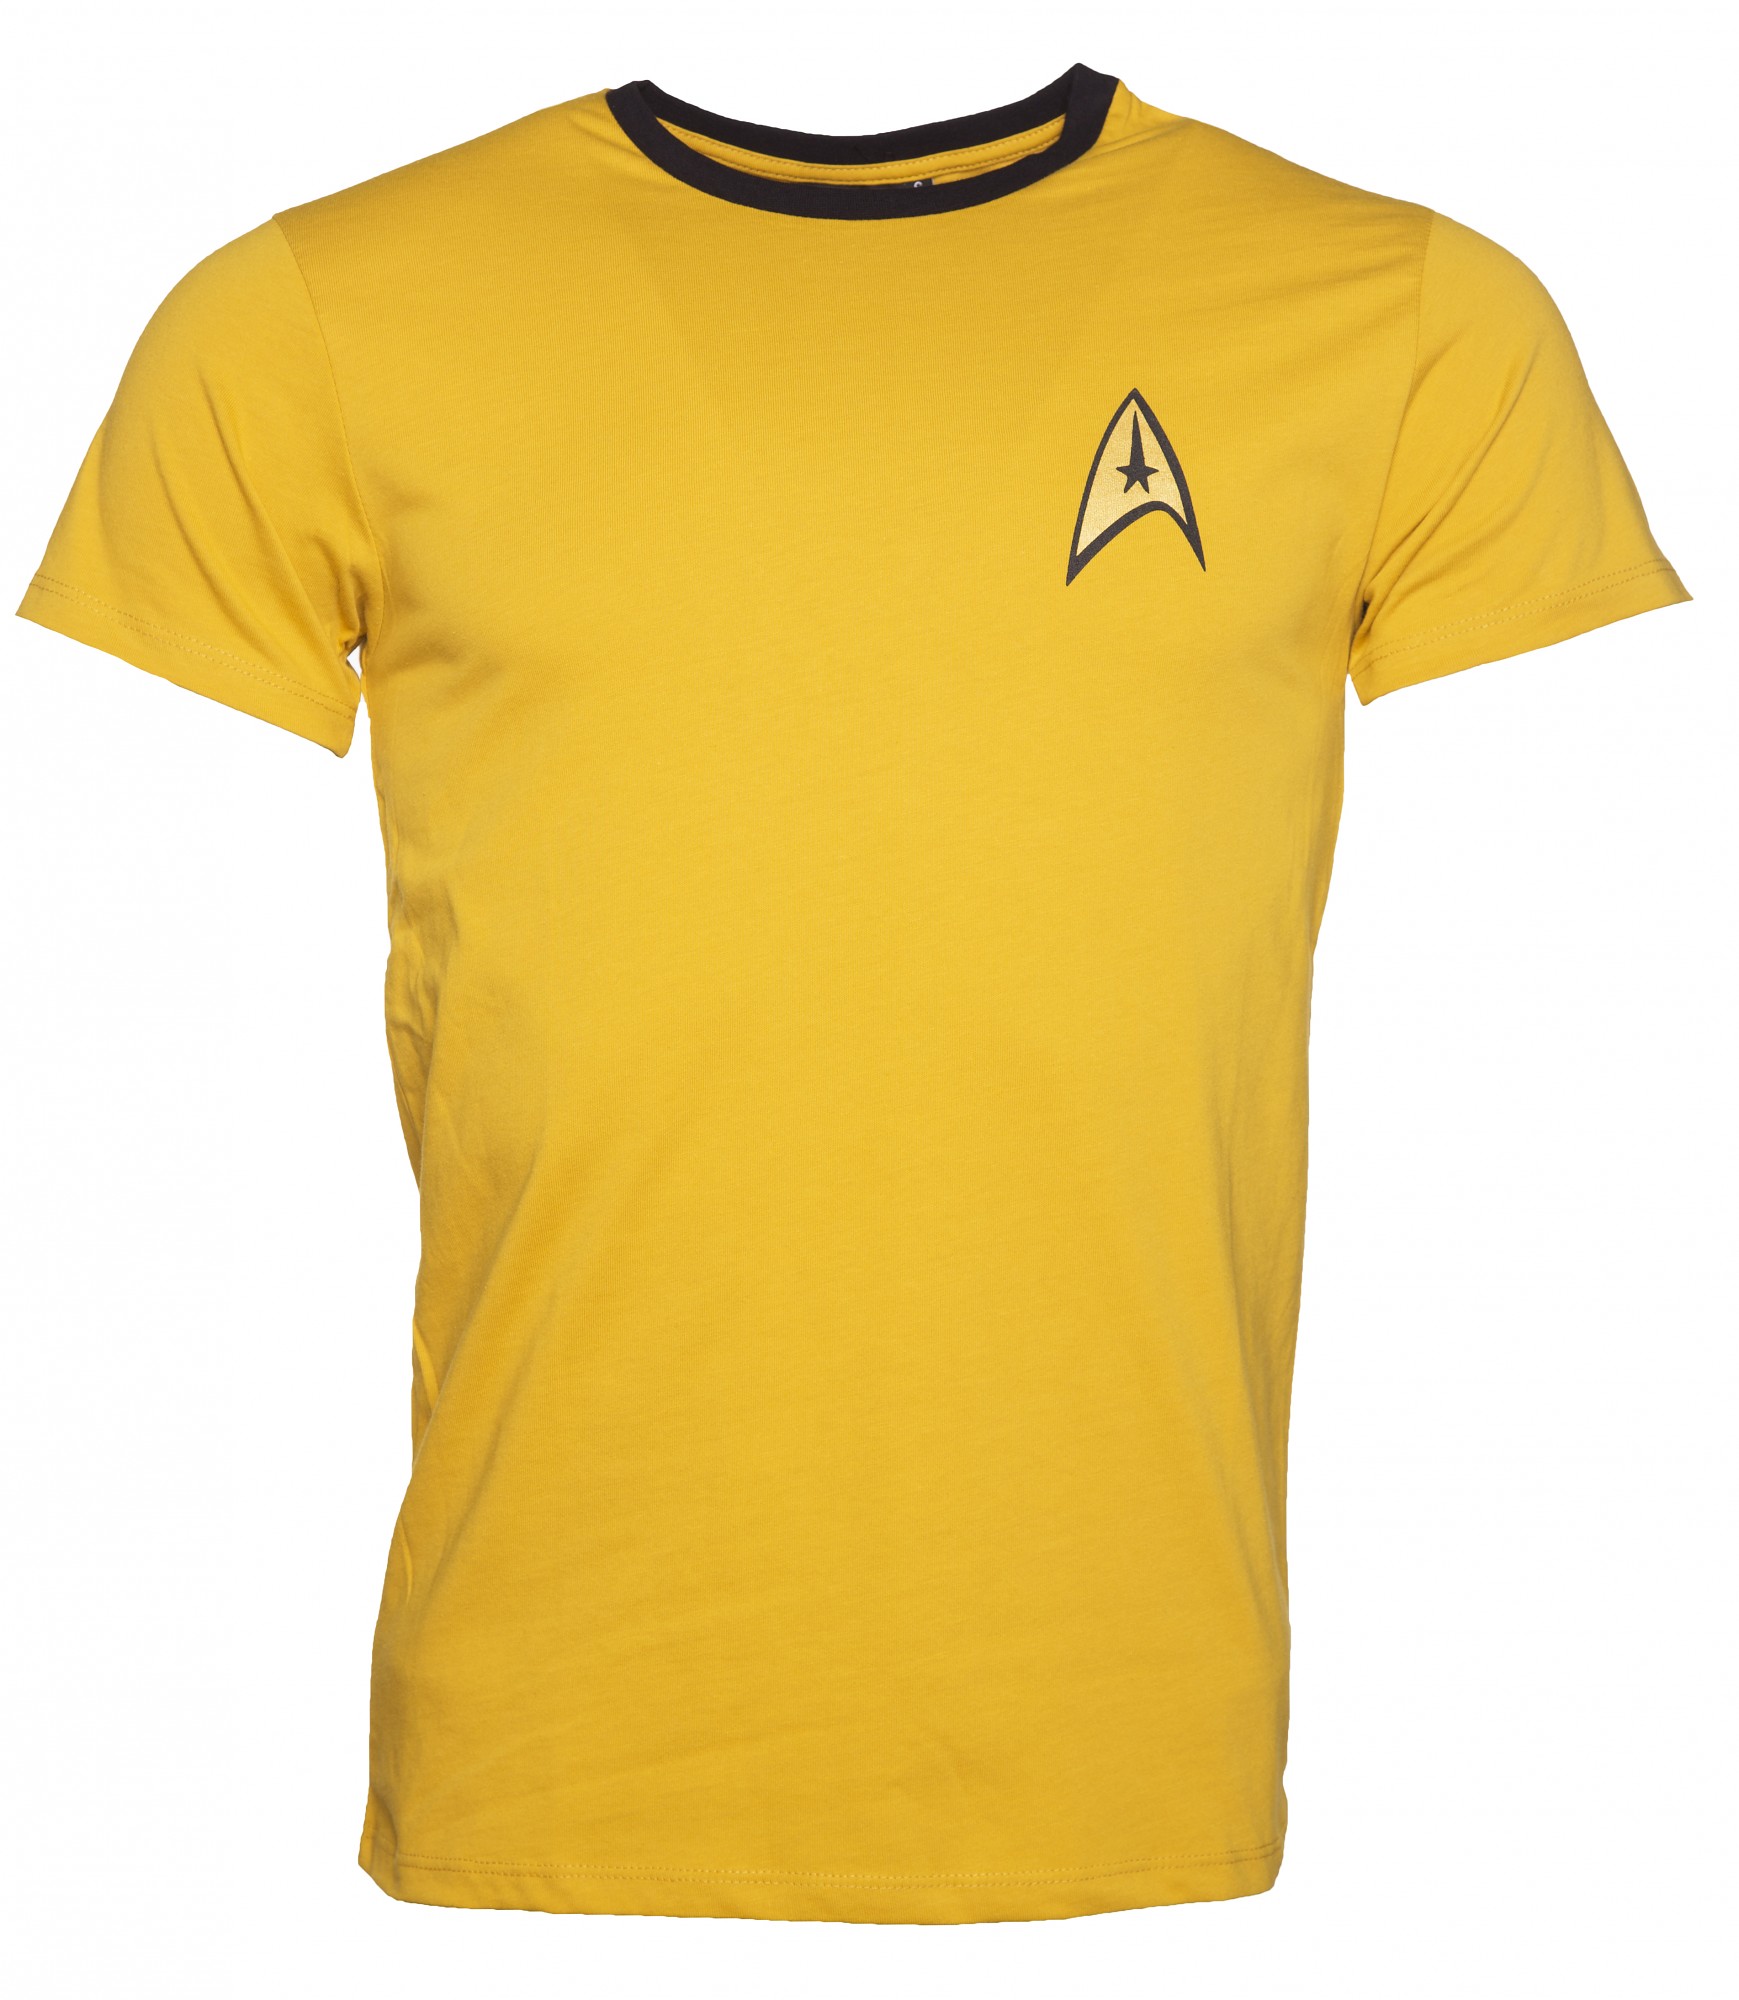 star trek yellow shirt name